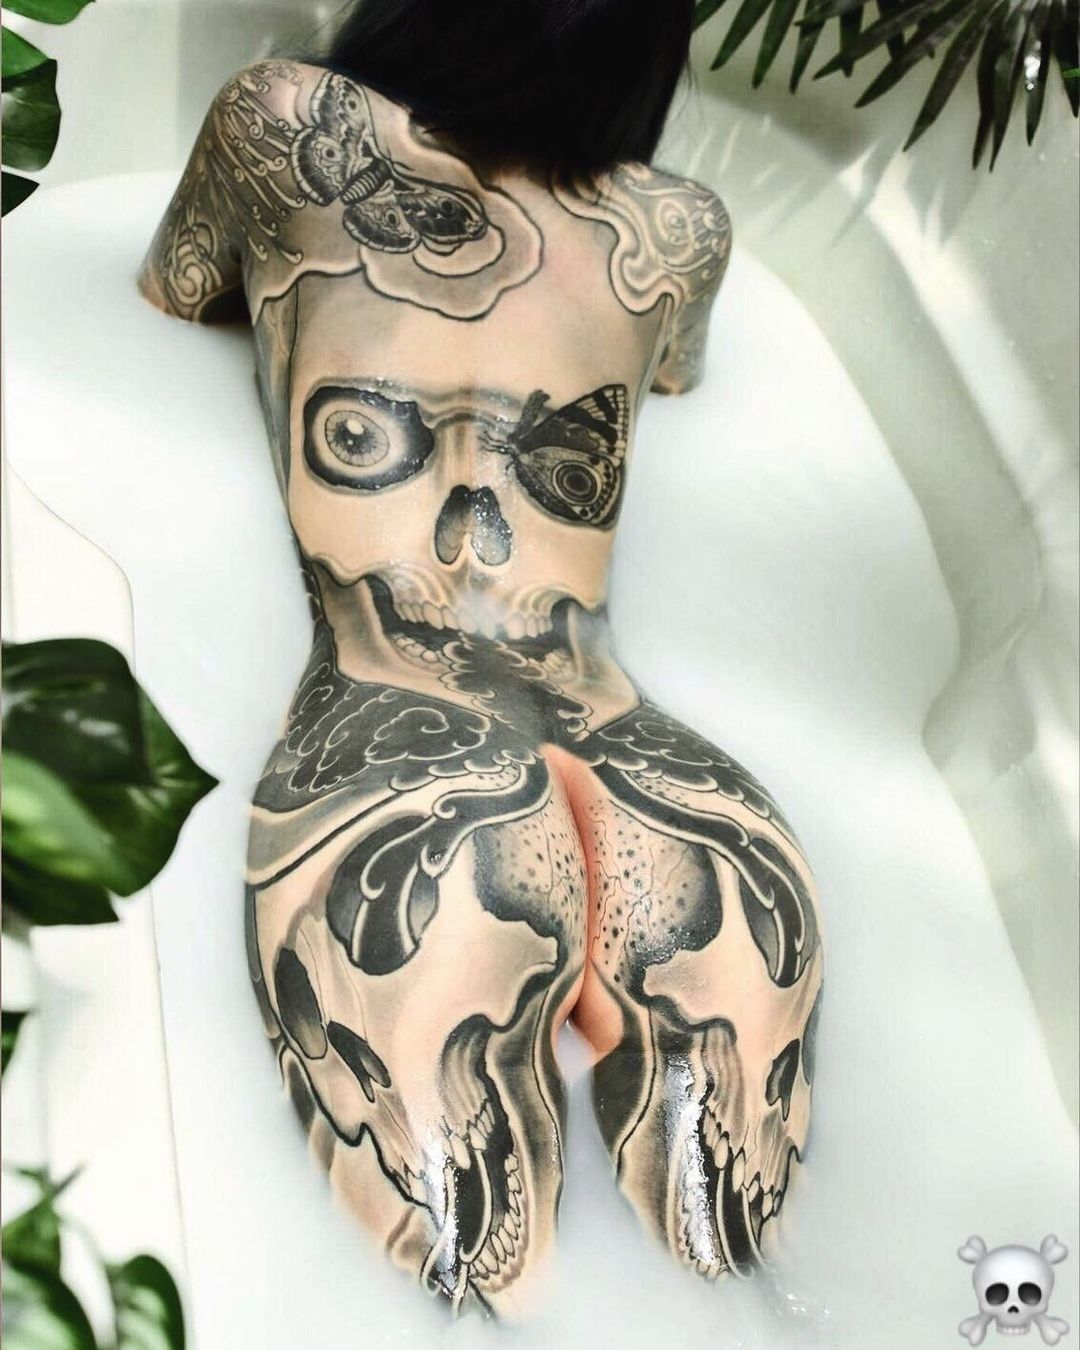 Tattooed Model © Link0208.